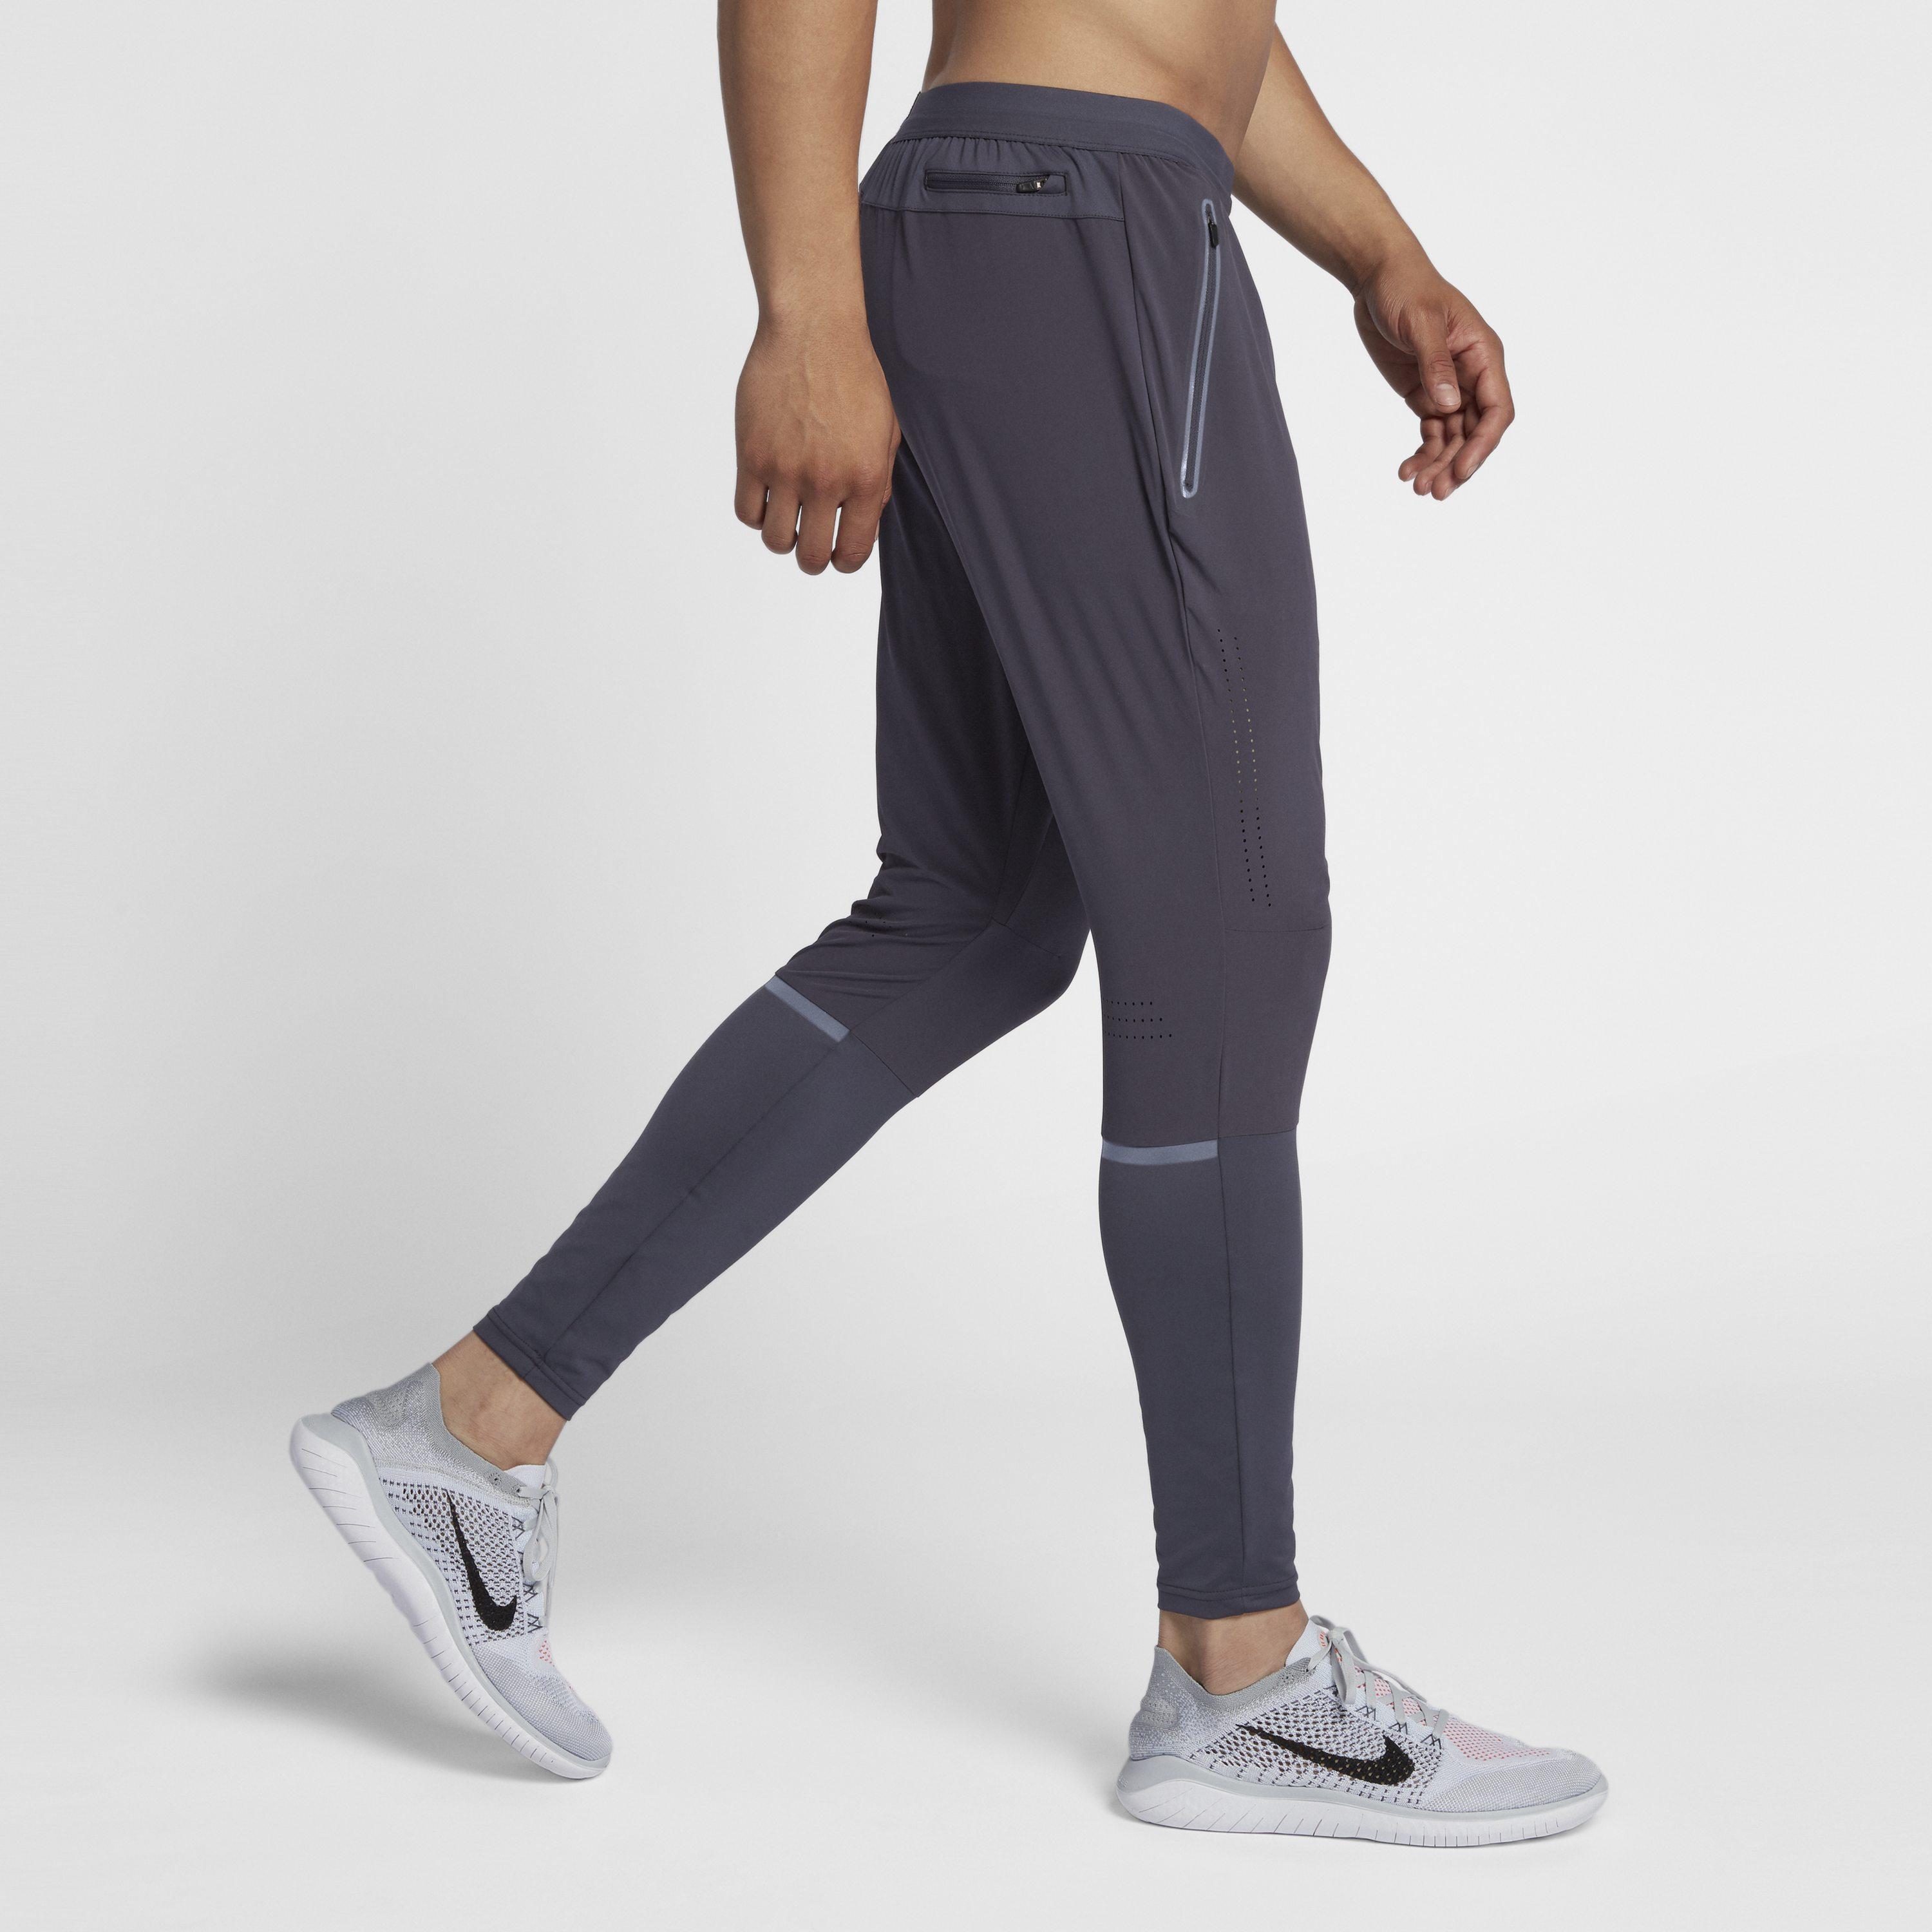 Nike Swift Running Trousers in Grey for Men